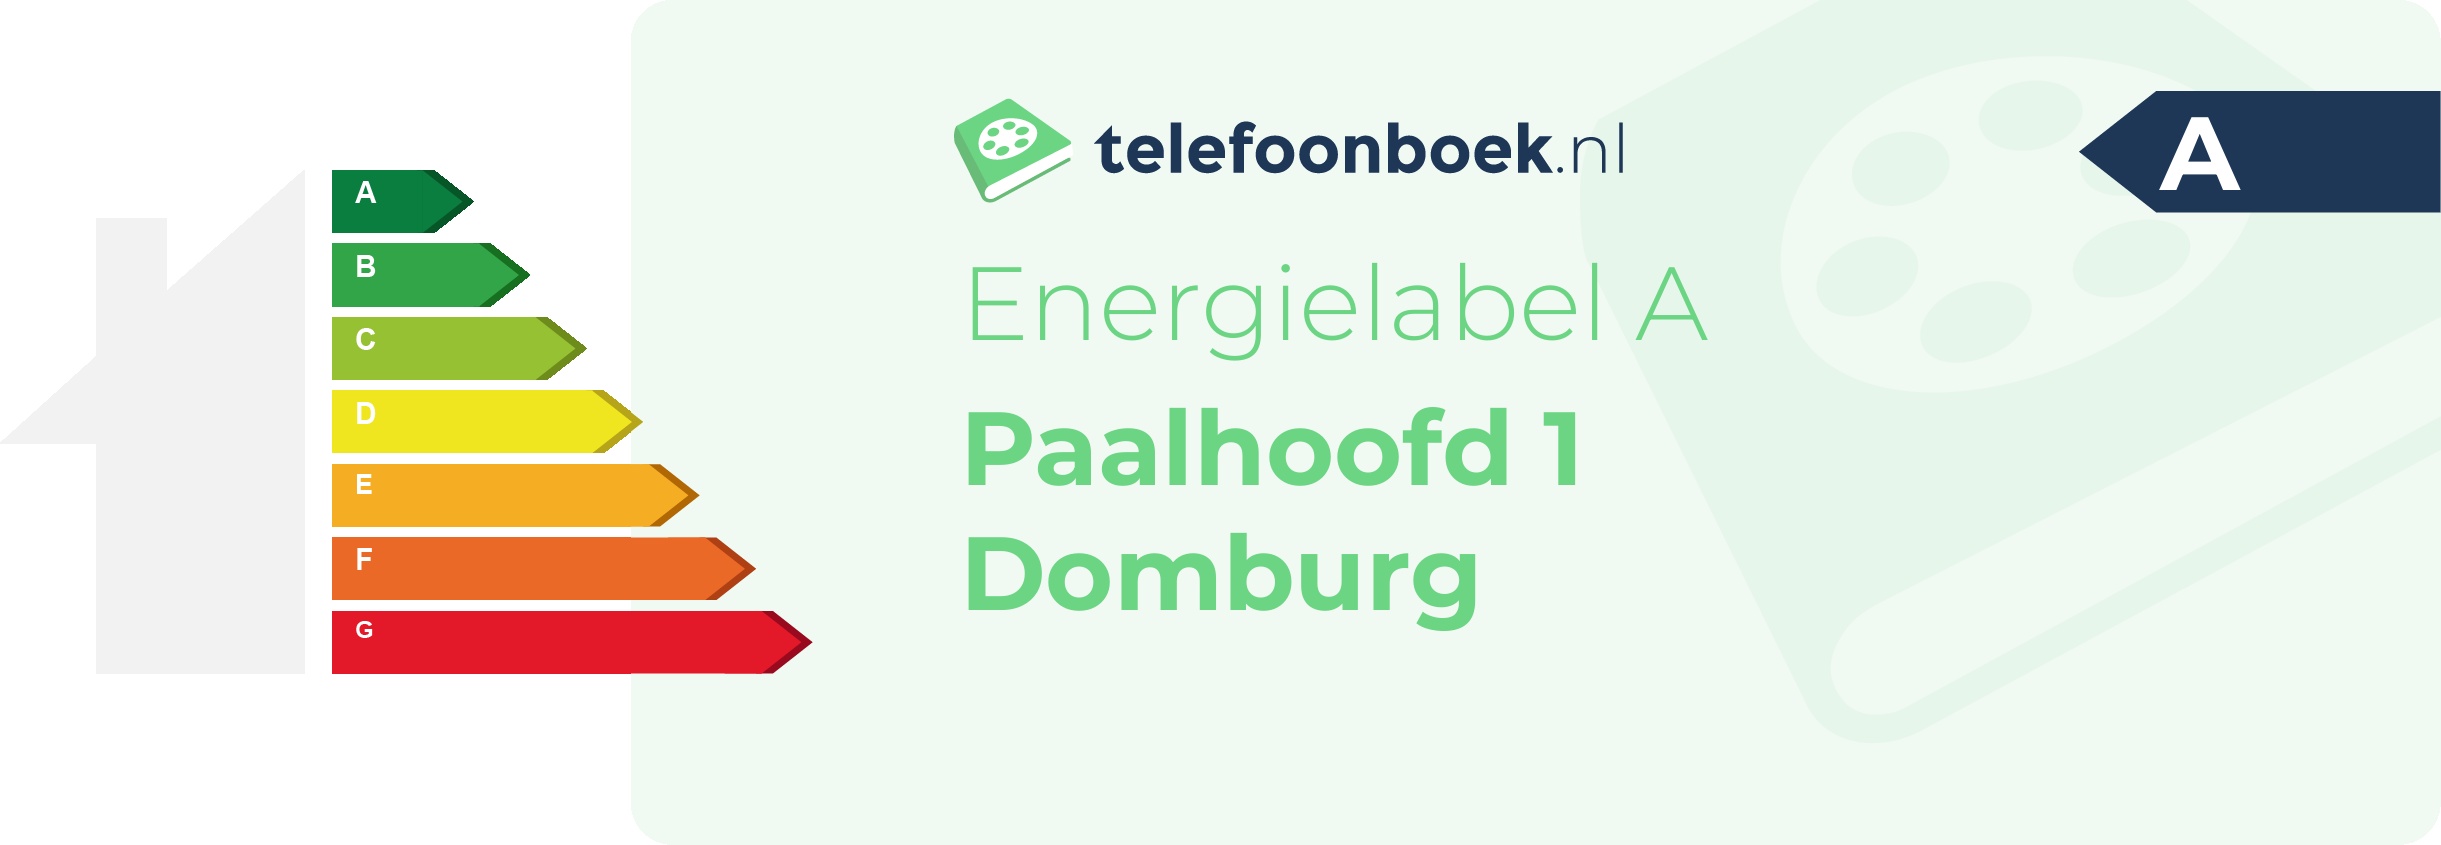 Energielabel Paalhoofd 1 Domburg